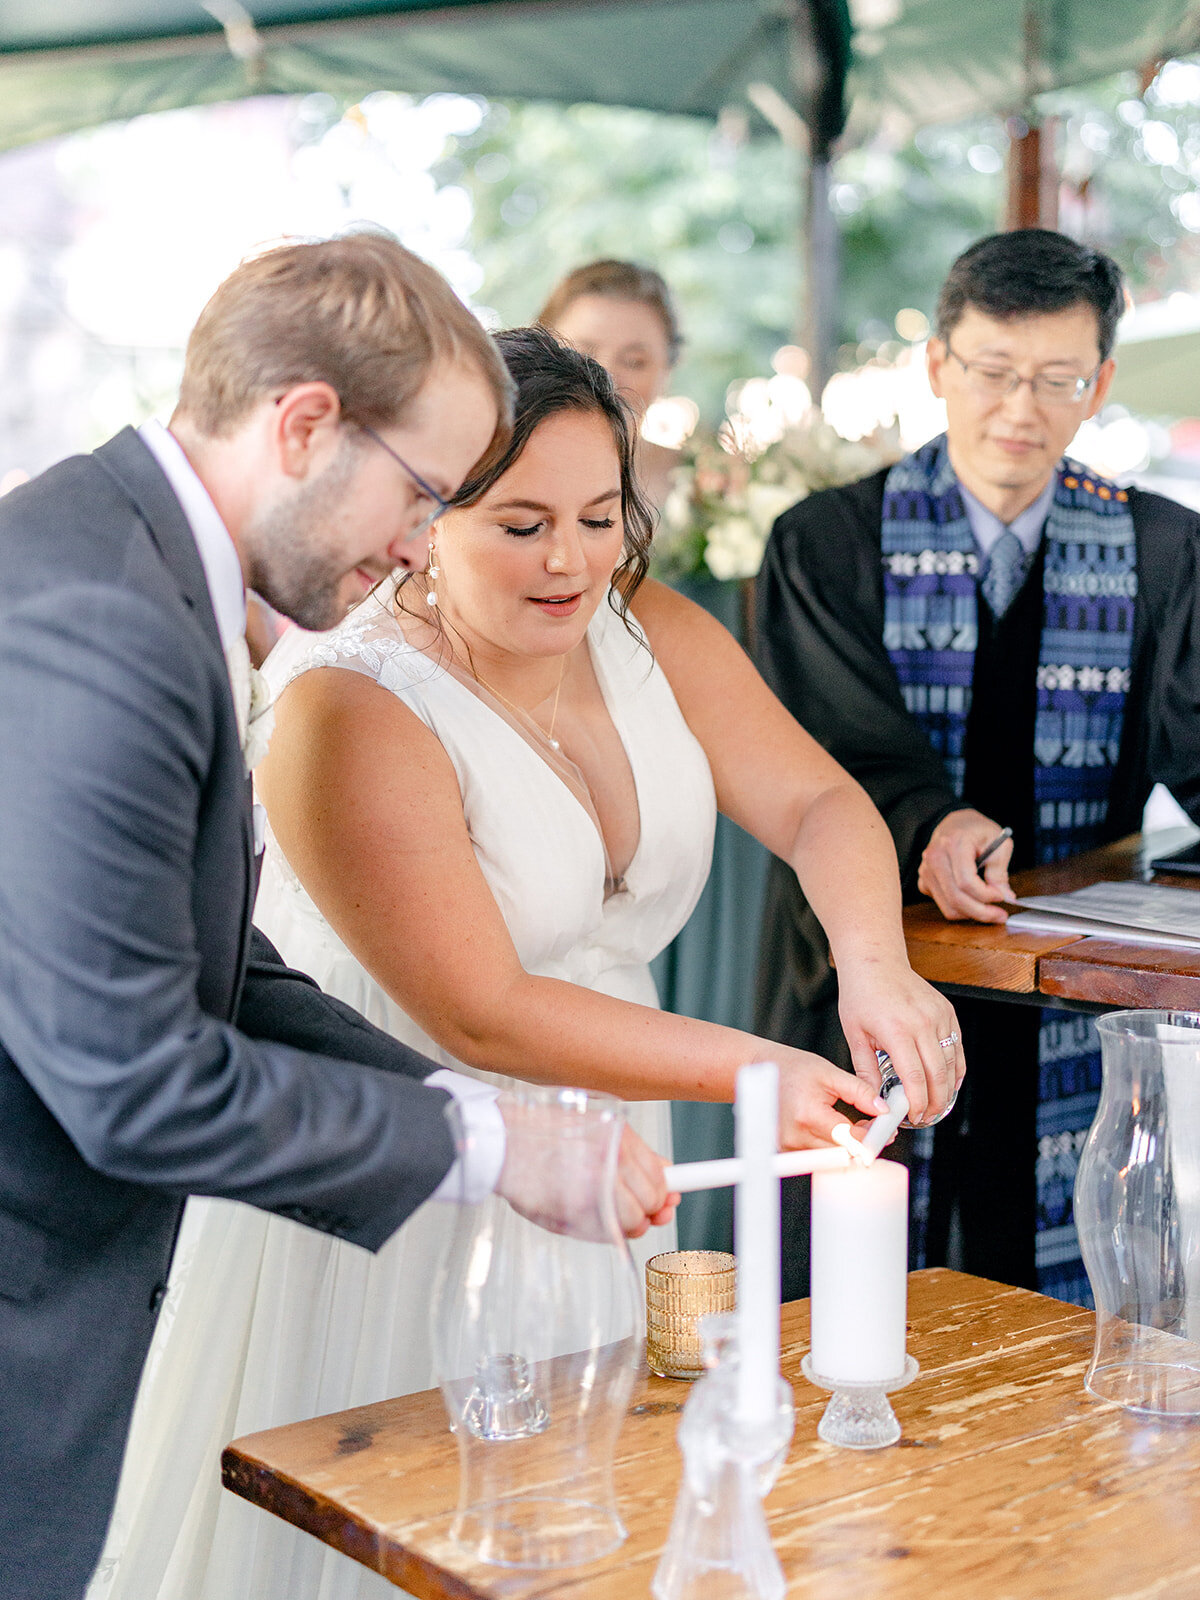 bride-groom-unity-symbol-lighting-candle